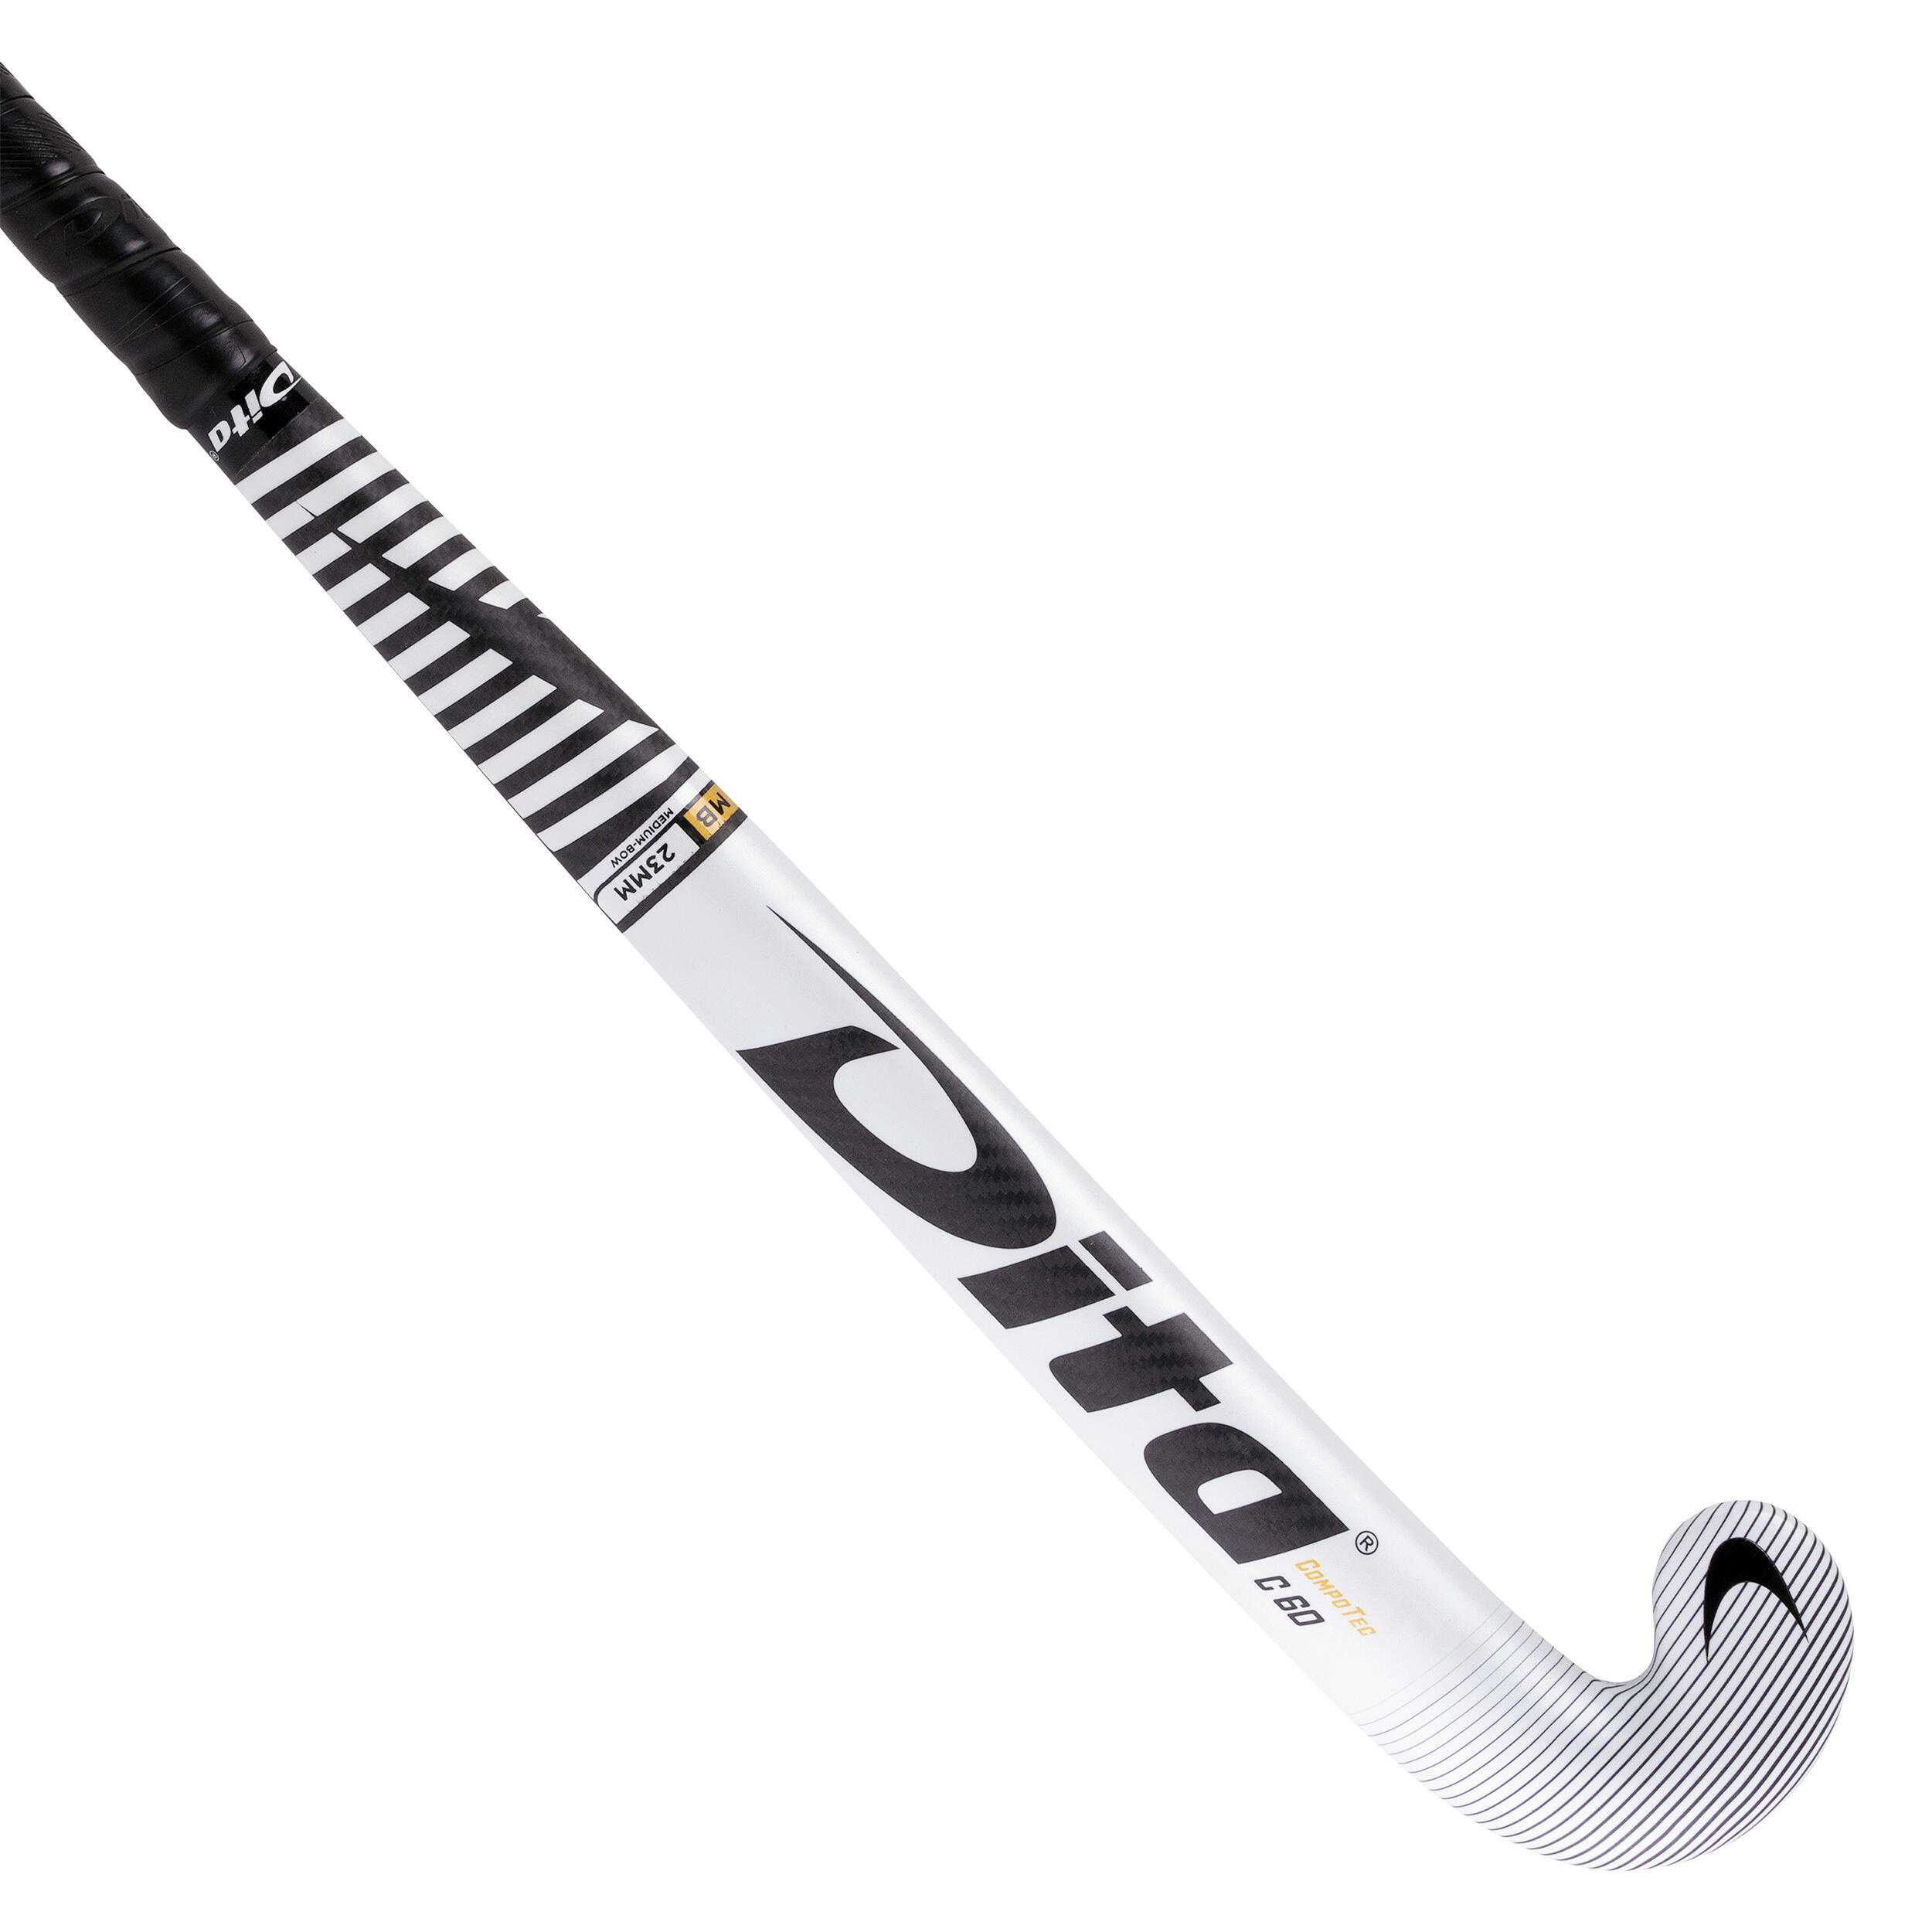 DITA Adult Intermediate 60% Carbon Mid Bow Field Hockey Stick CompotecC60 - White/Black